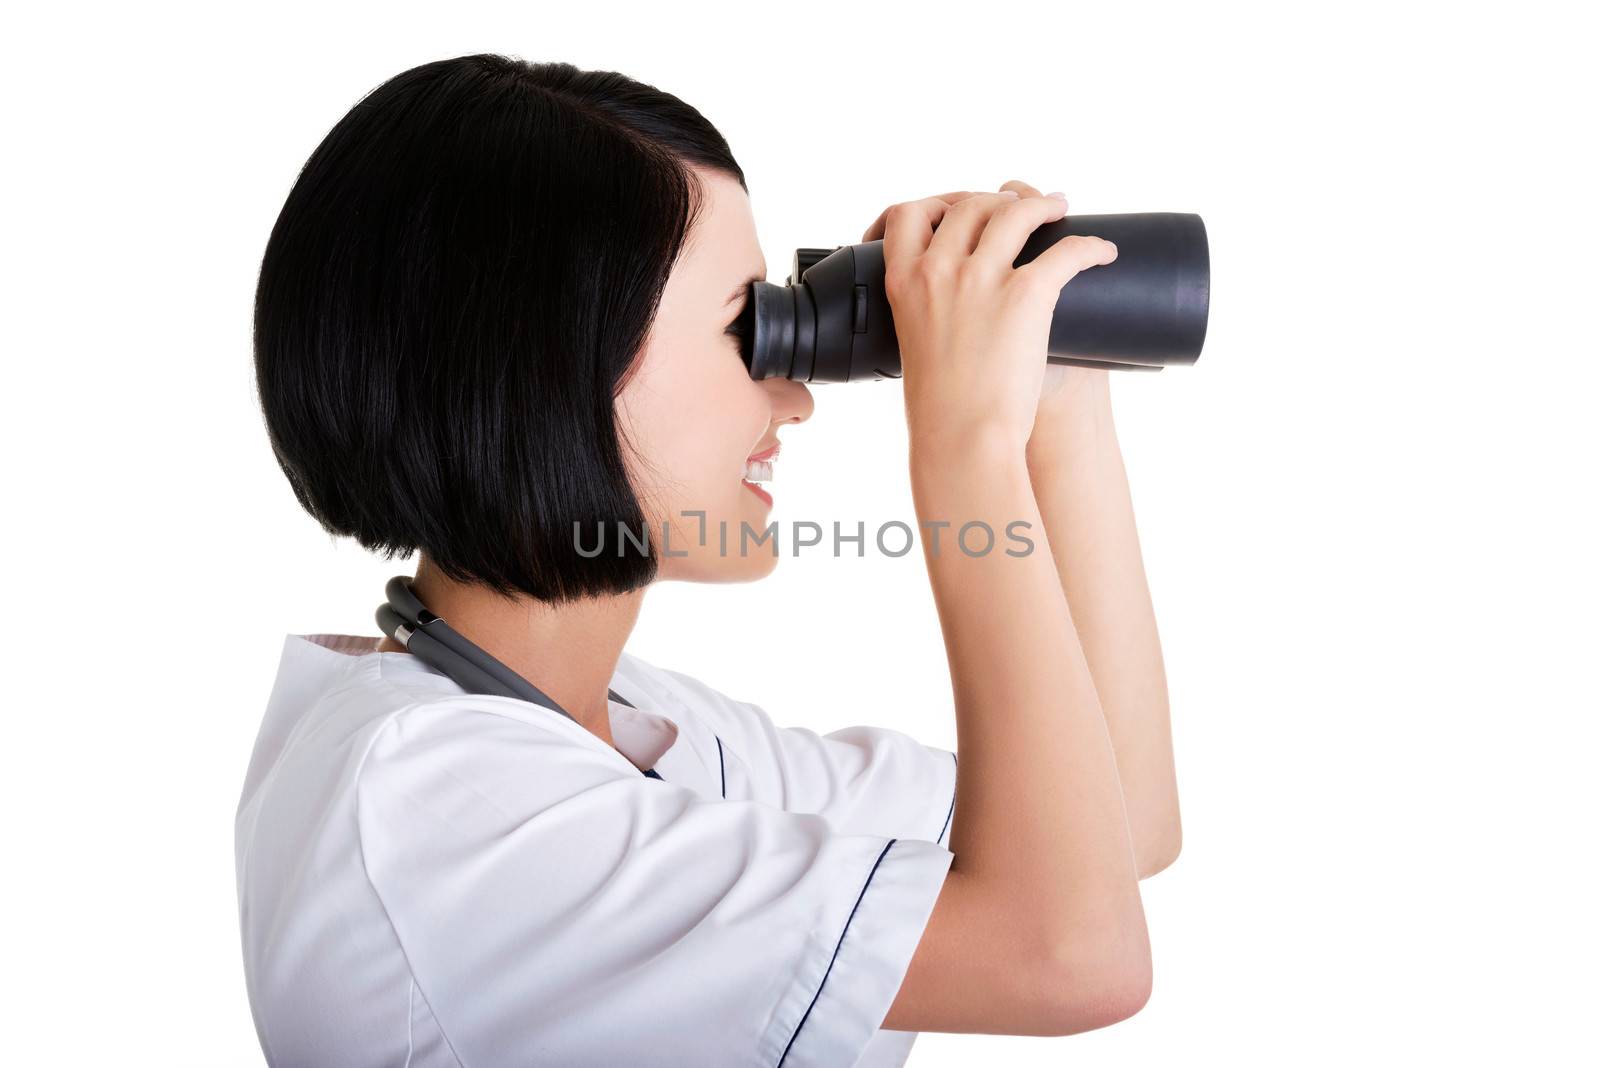 Looking in the futere of health care. Female doctor or nurse looking through binoculars.